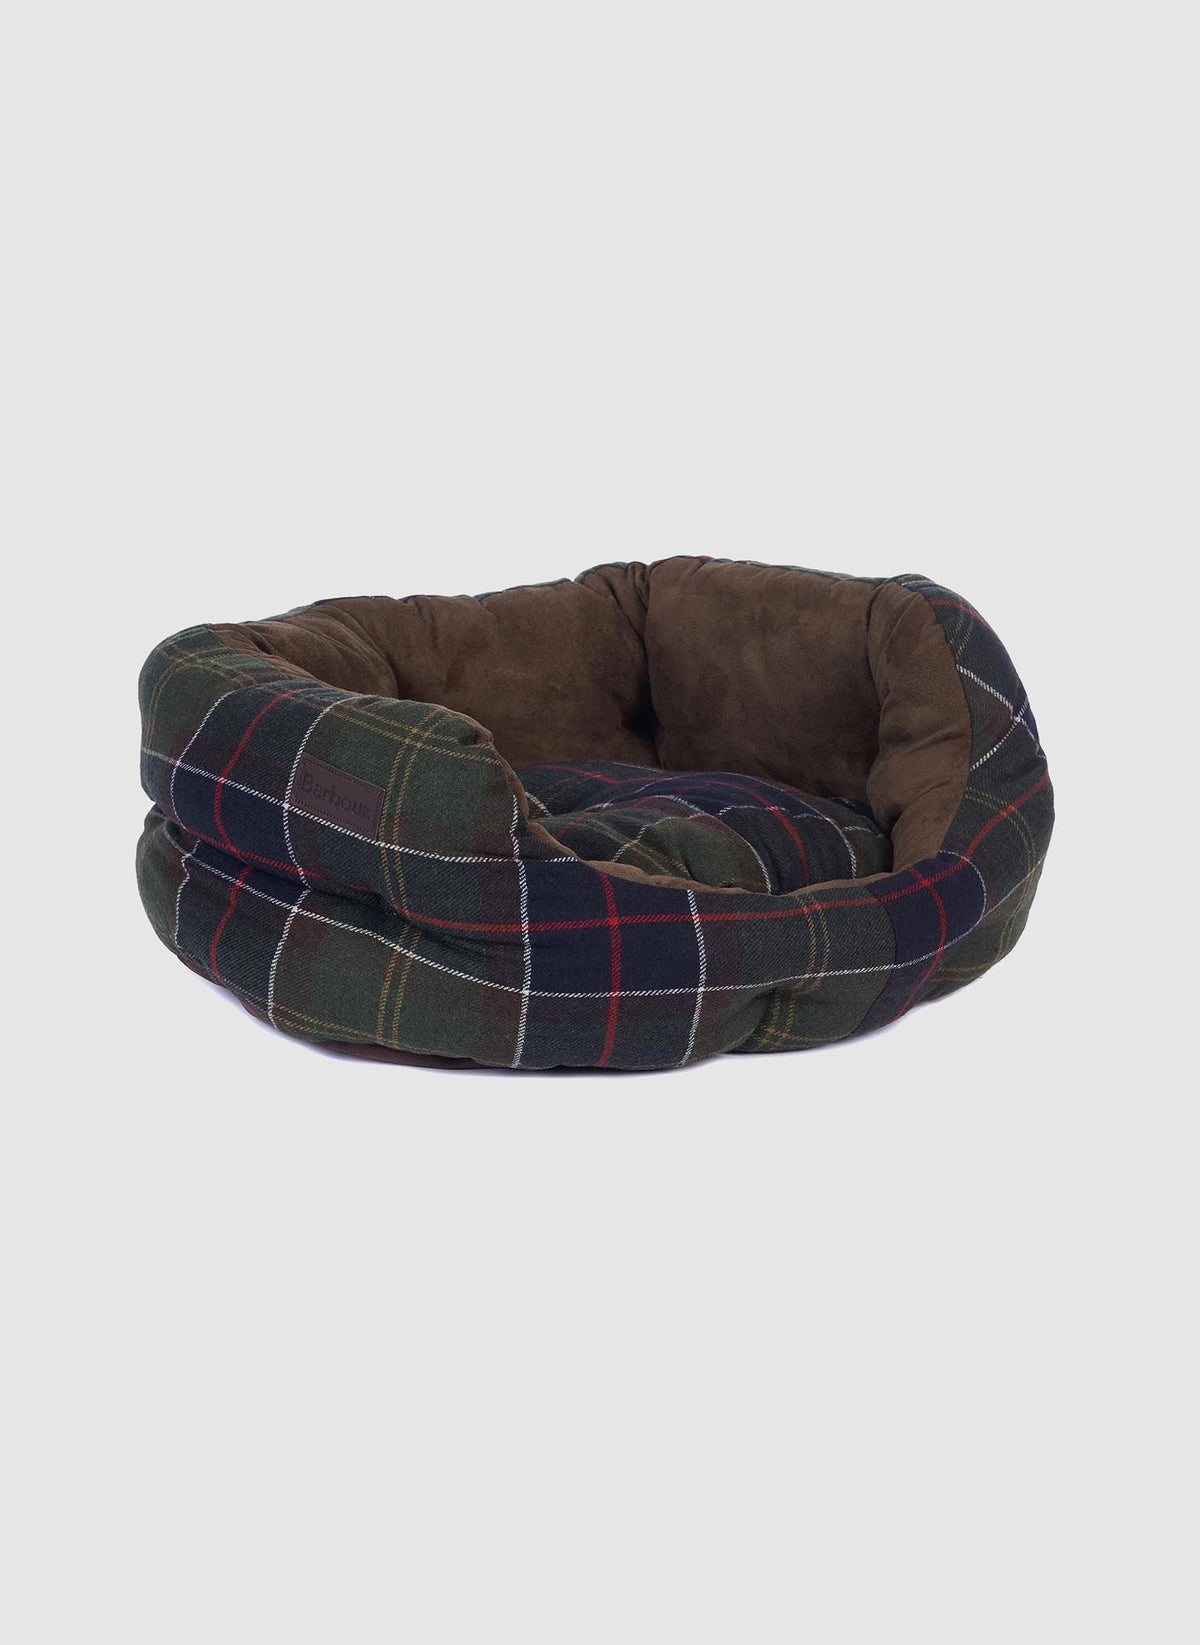 24in Luxury Dog Bed - Classic Tartan